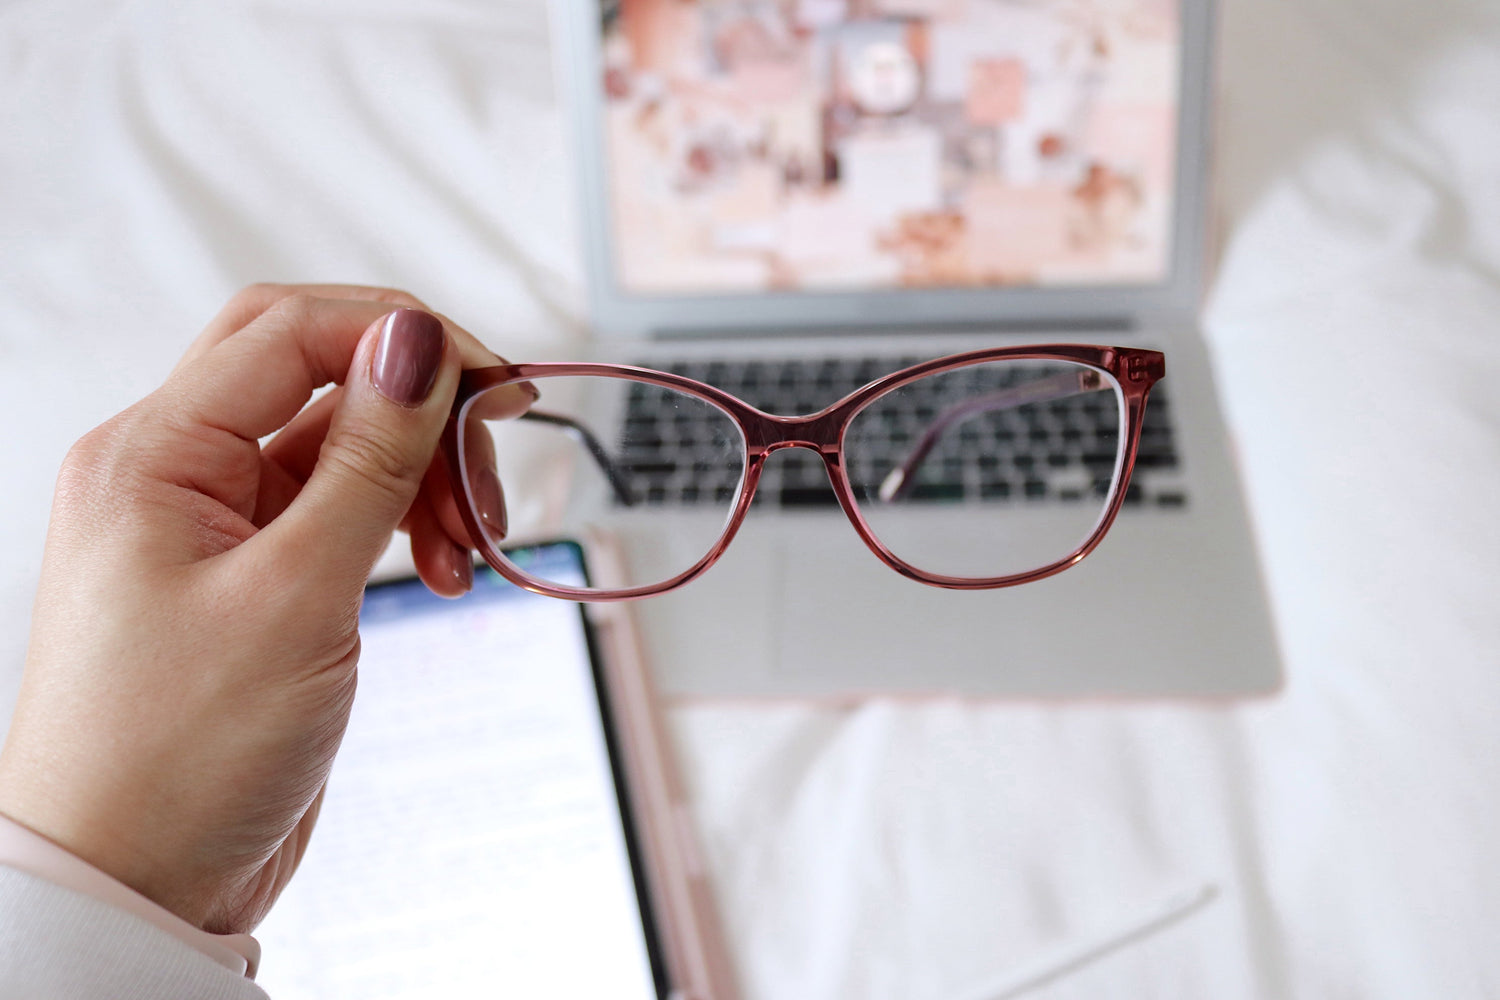 can glasses make you look younger? | KOALAEYE OPTICAL